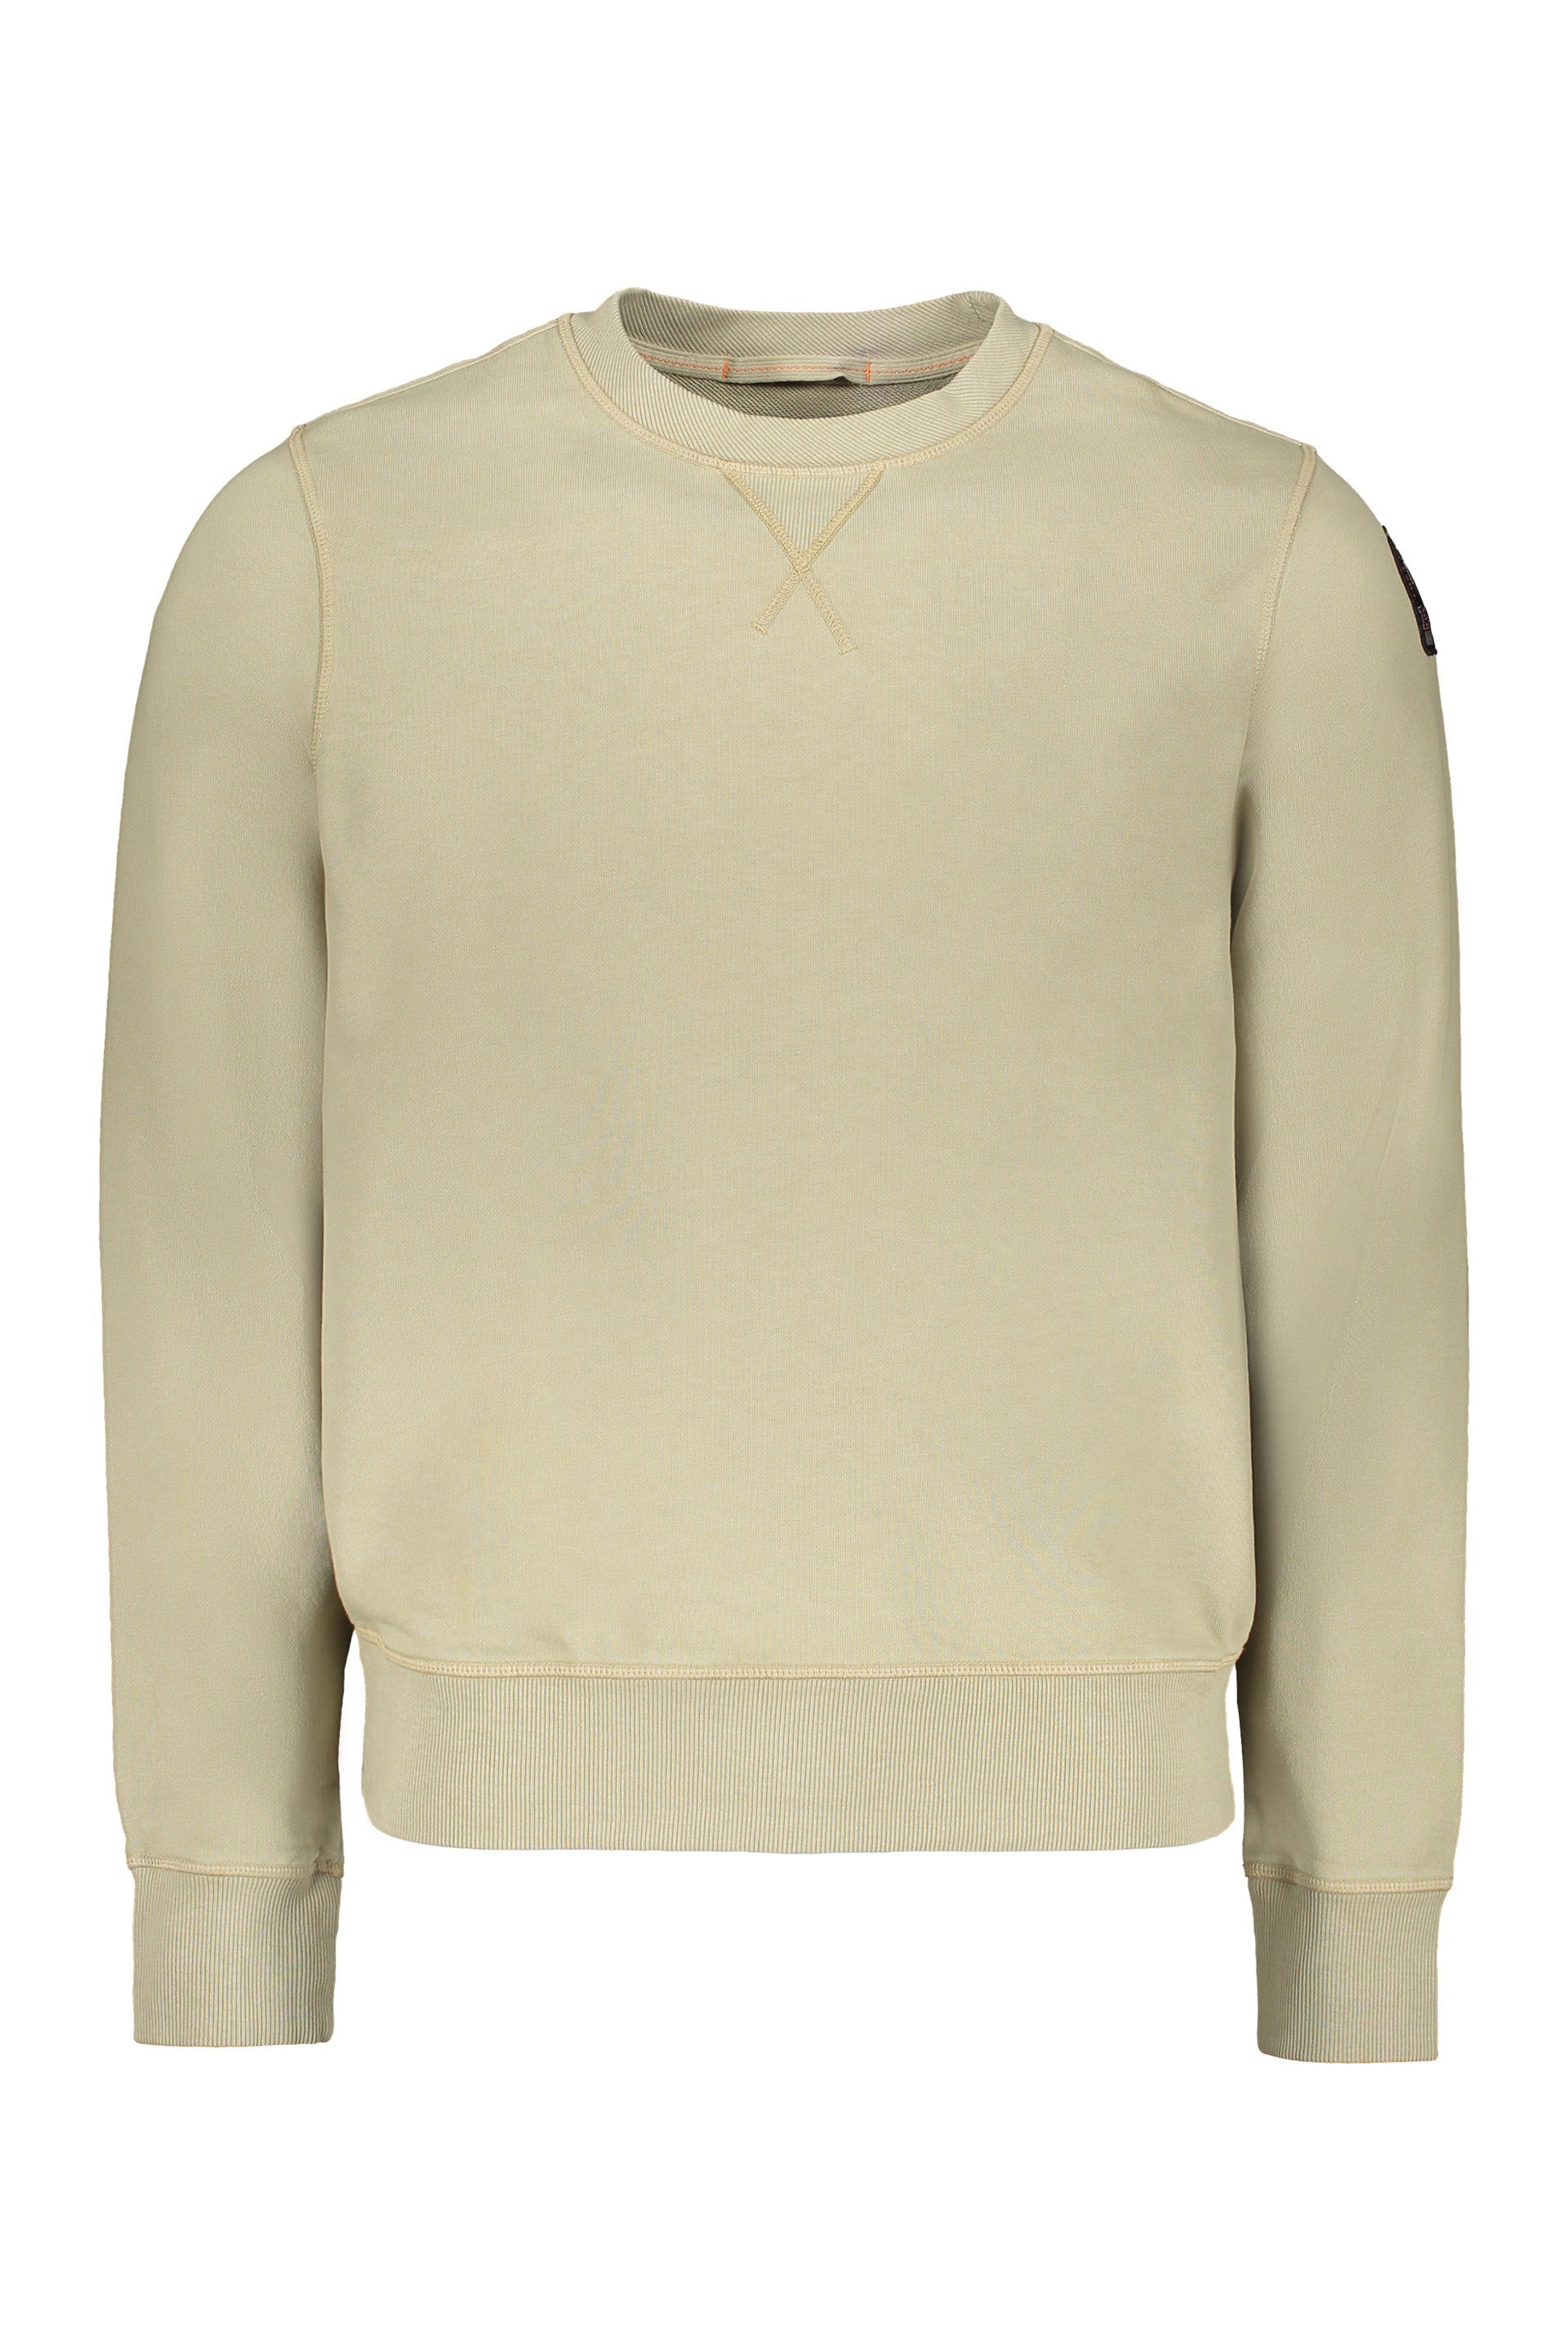 Caler Basic long sleeve sweatshirt